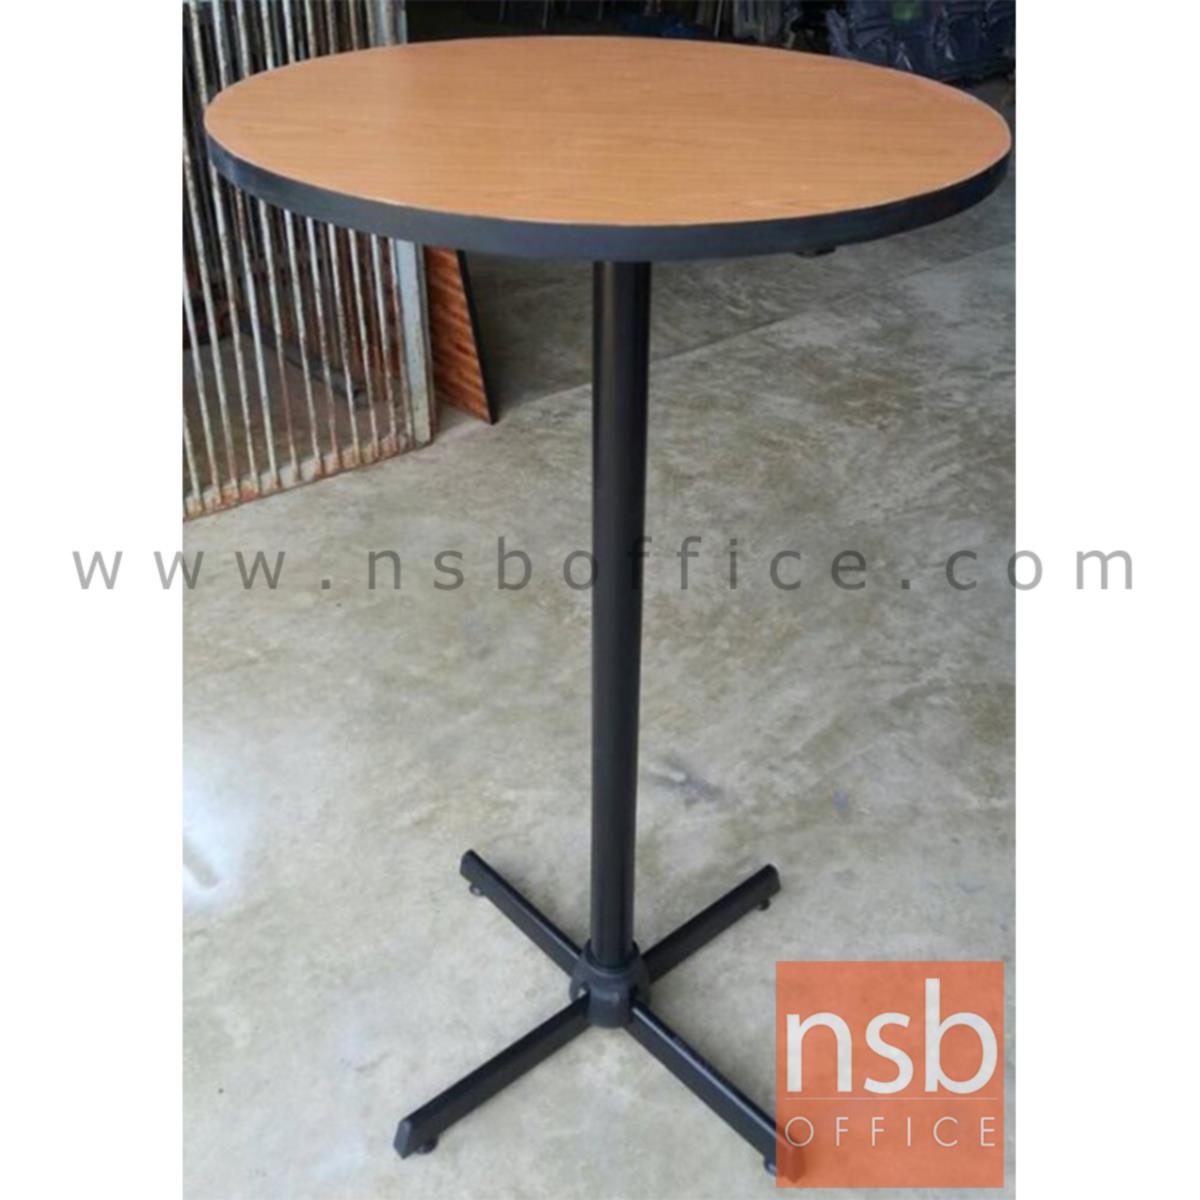 A14A228:โต๊ะหน้าไม้ รุุ่น SCHLESWIG (ชเลสวิก) ขนาด 61Di cm. ขาเหล็ก